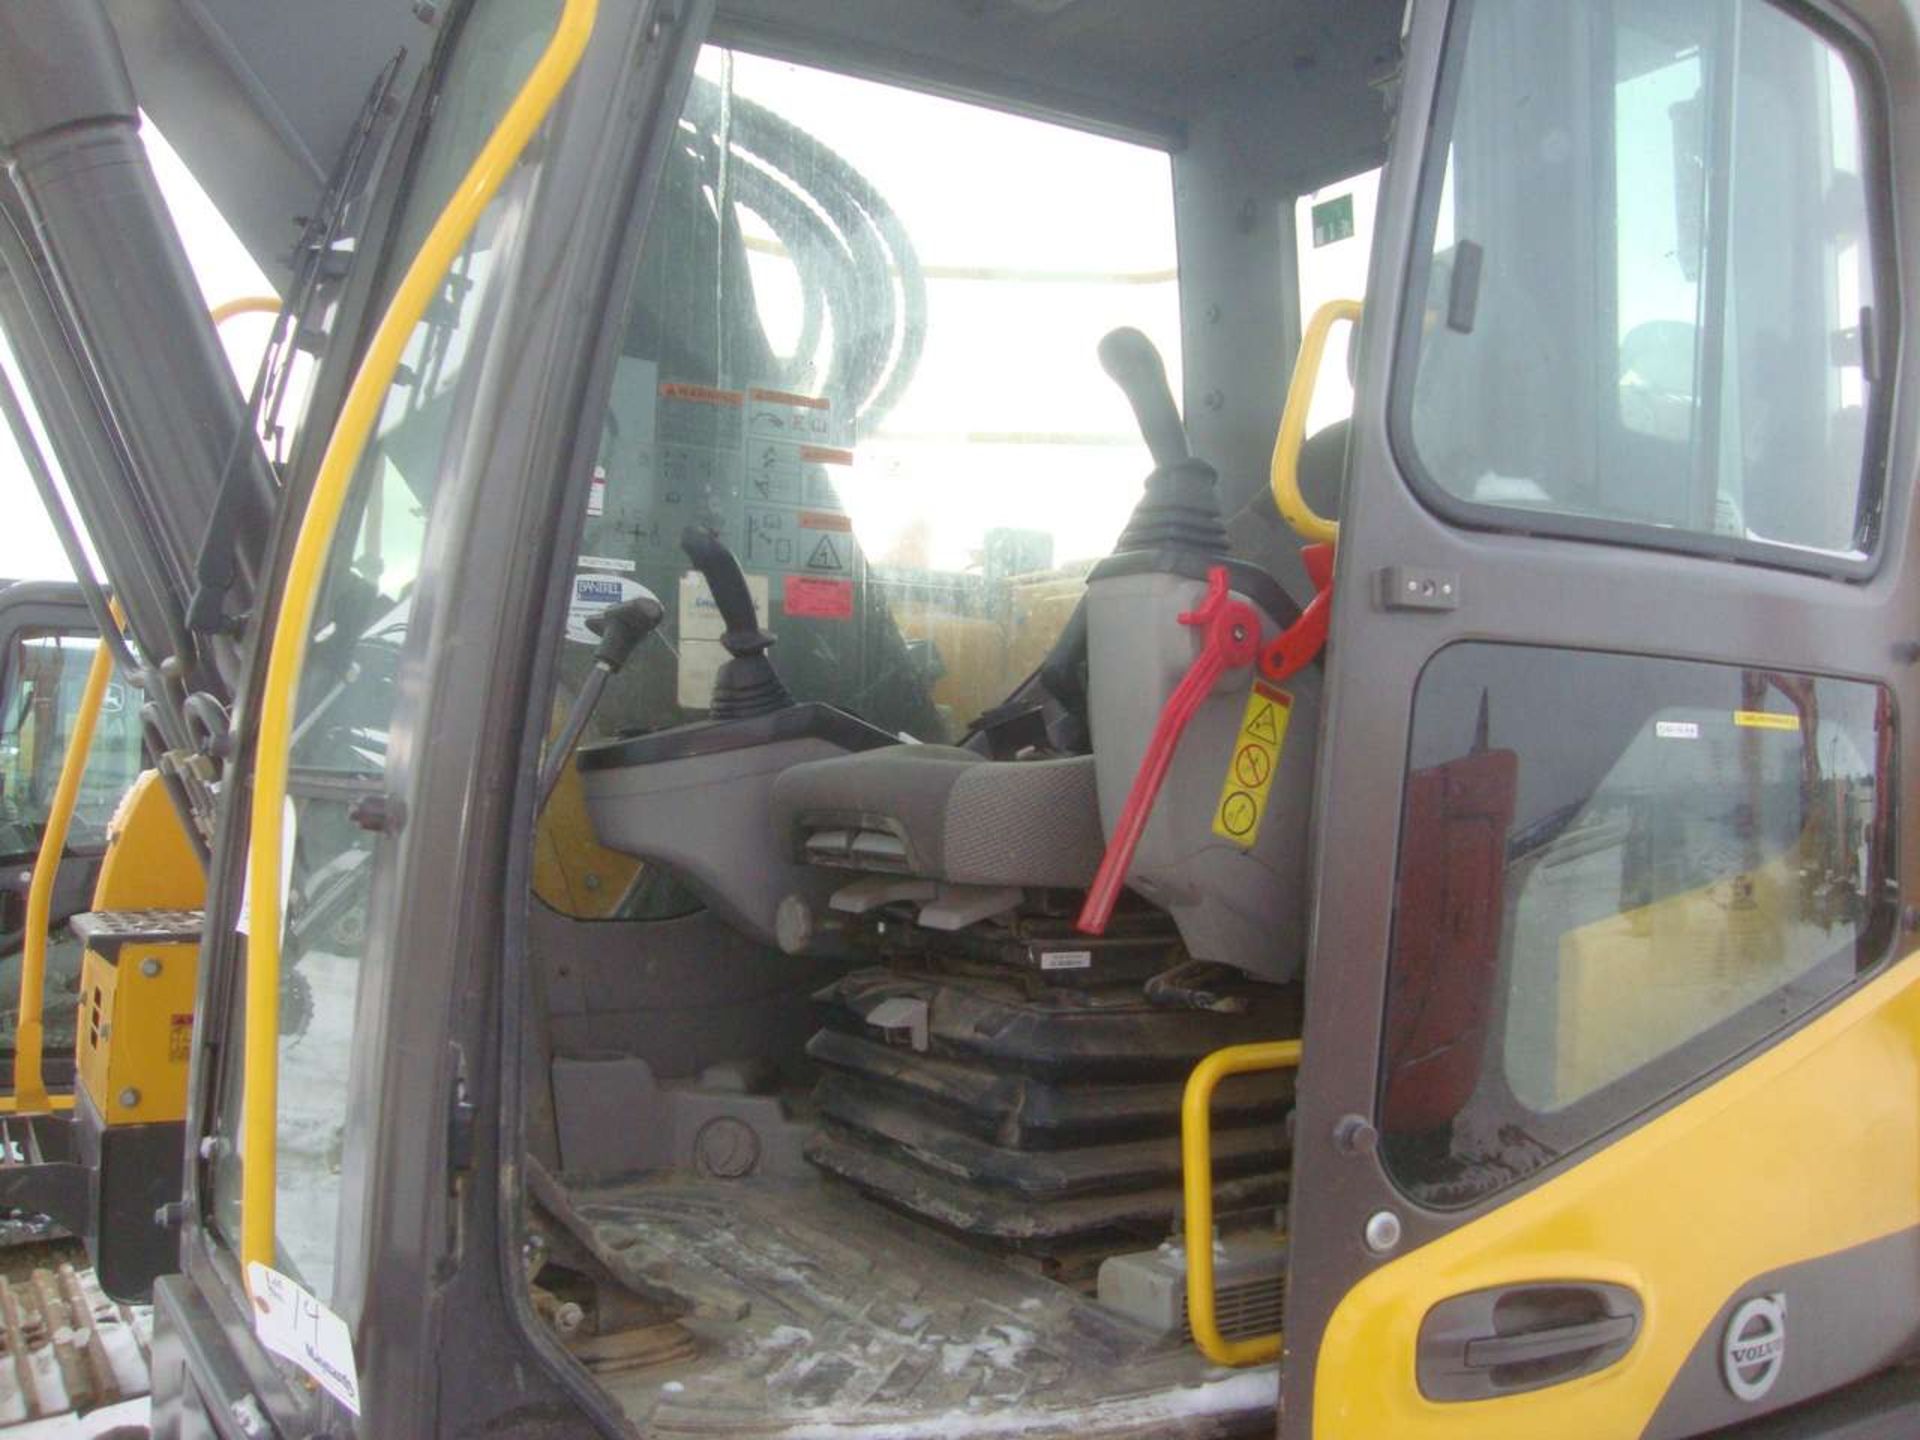 2014 Volvo ECR235DL Excavator - Image 9 of 16